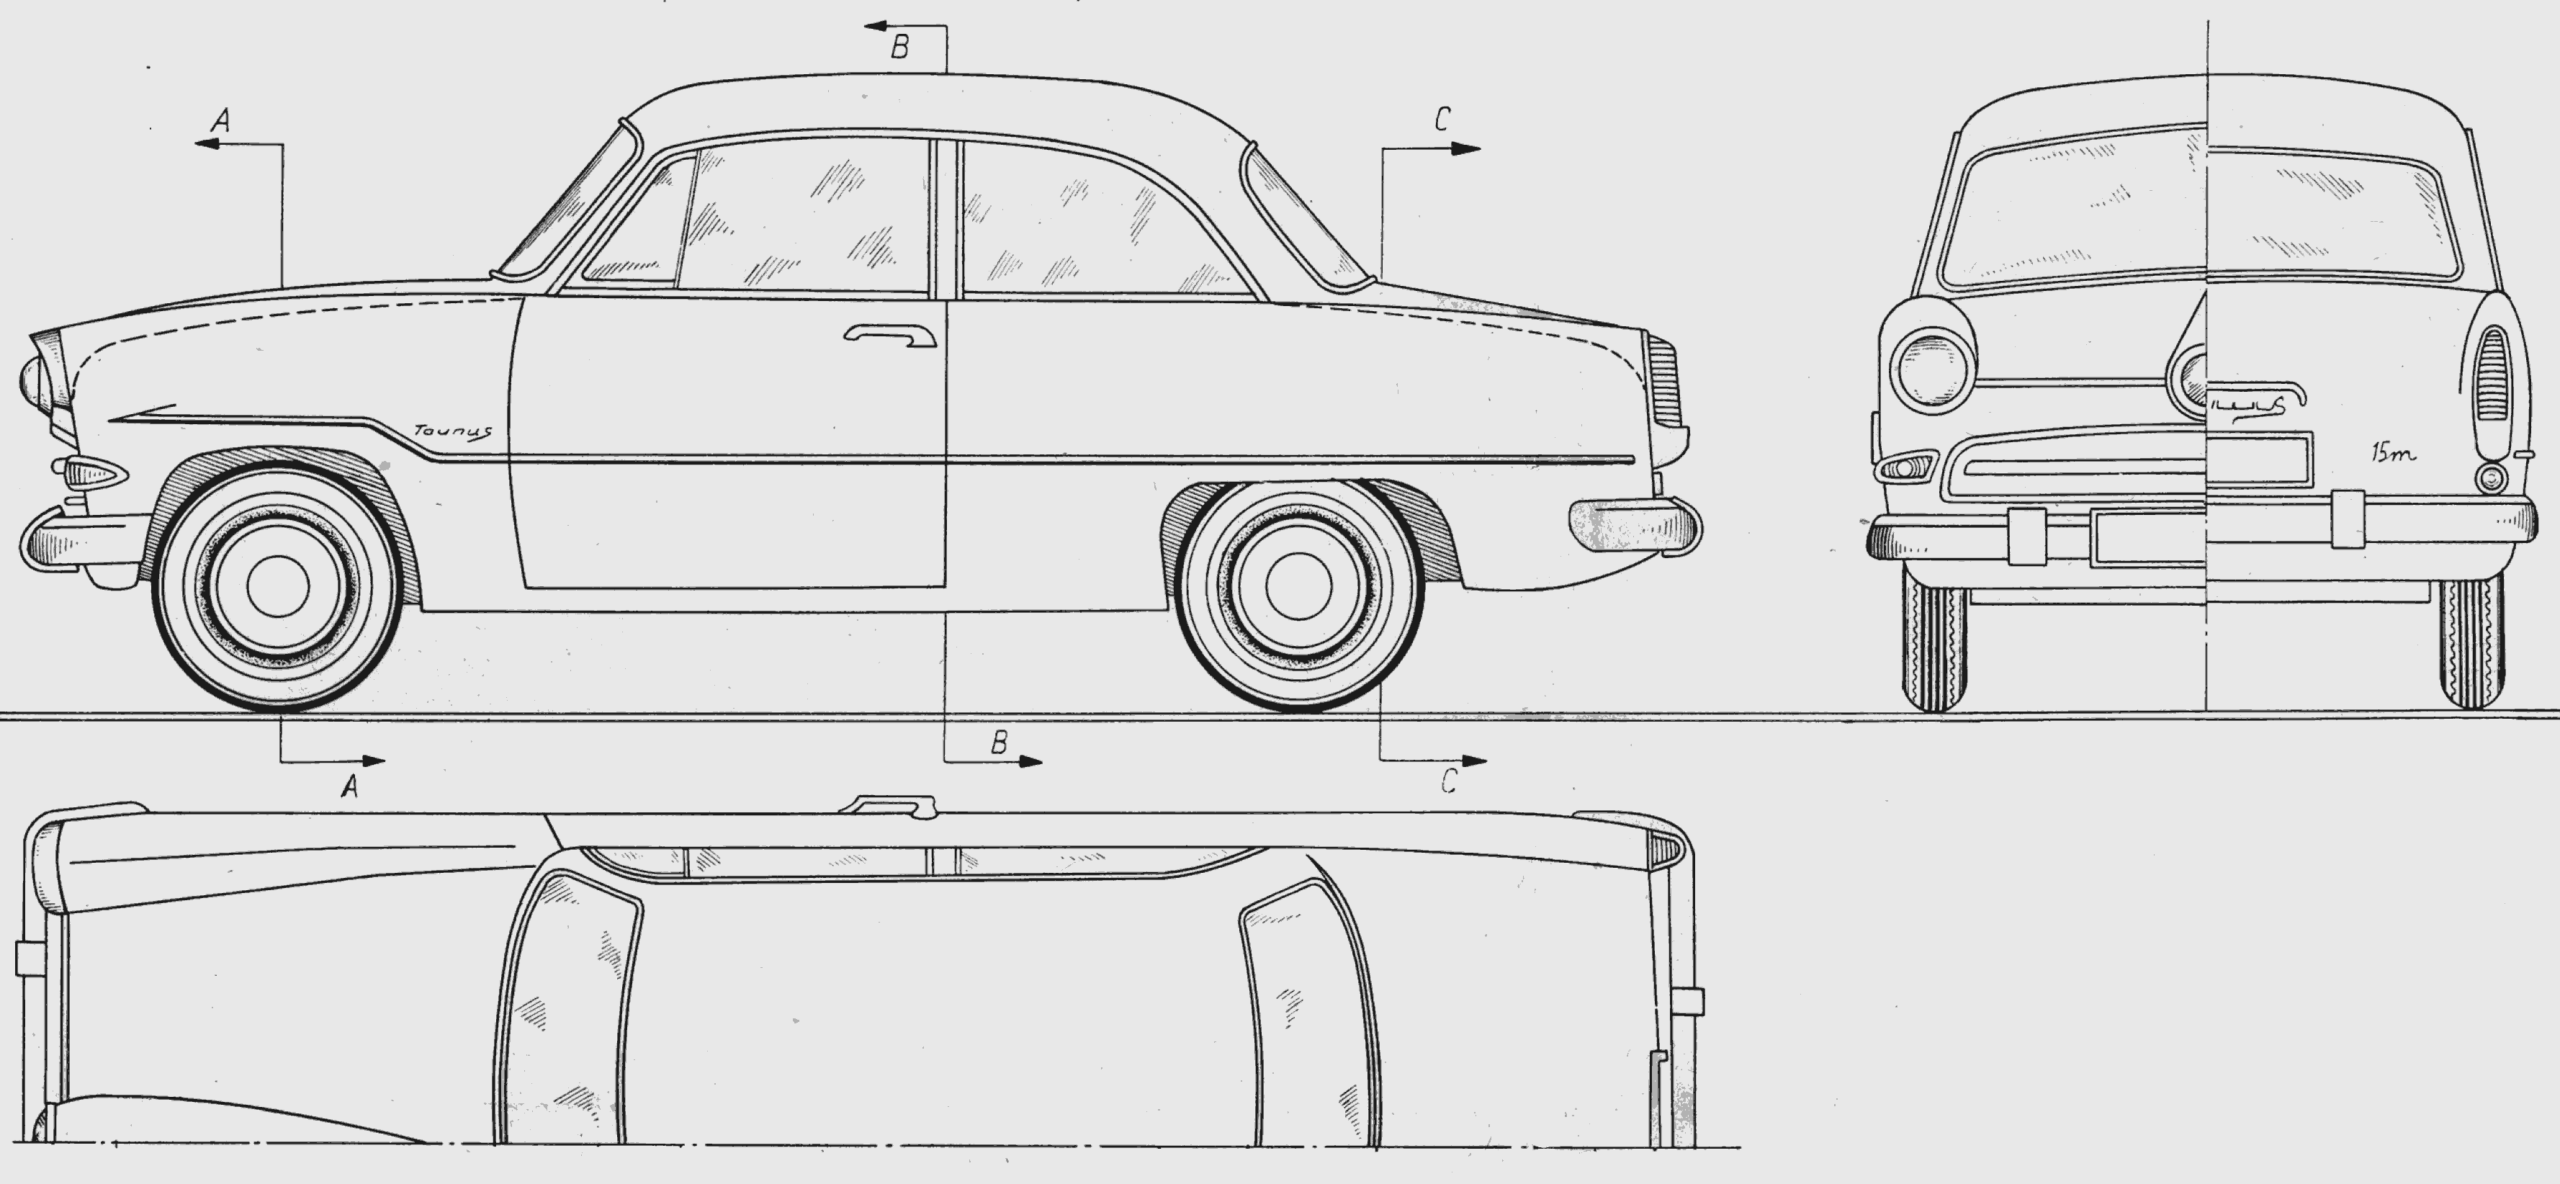 Ford Taunus P1 blueprint